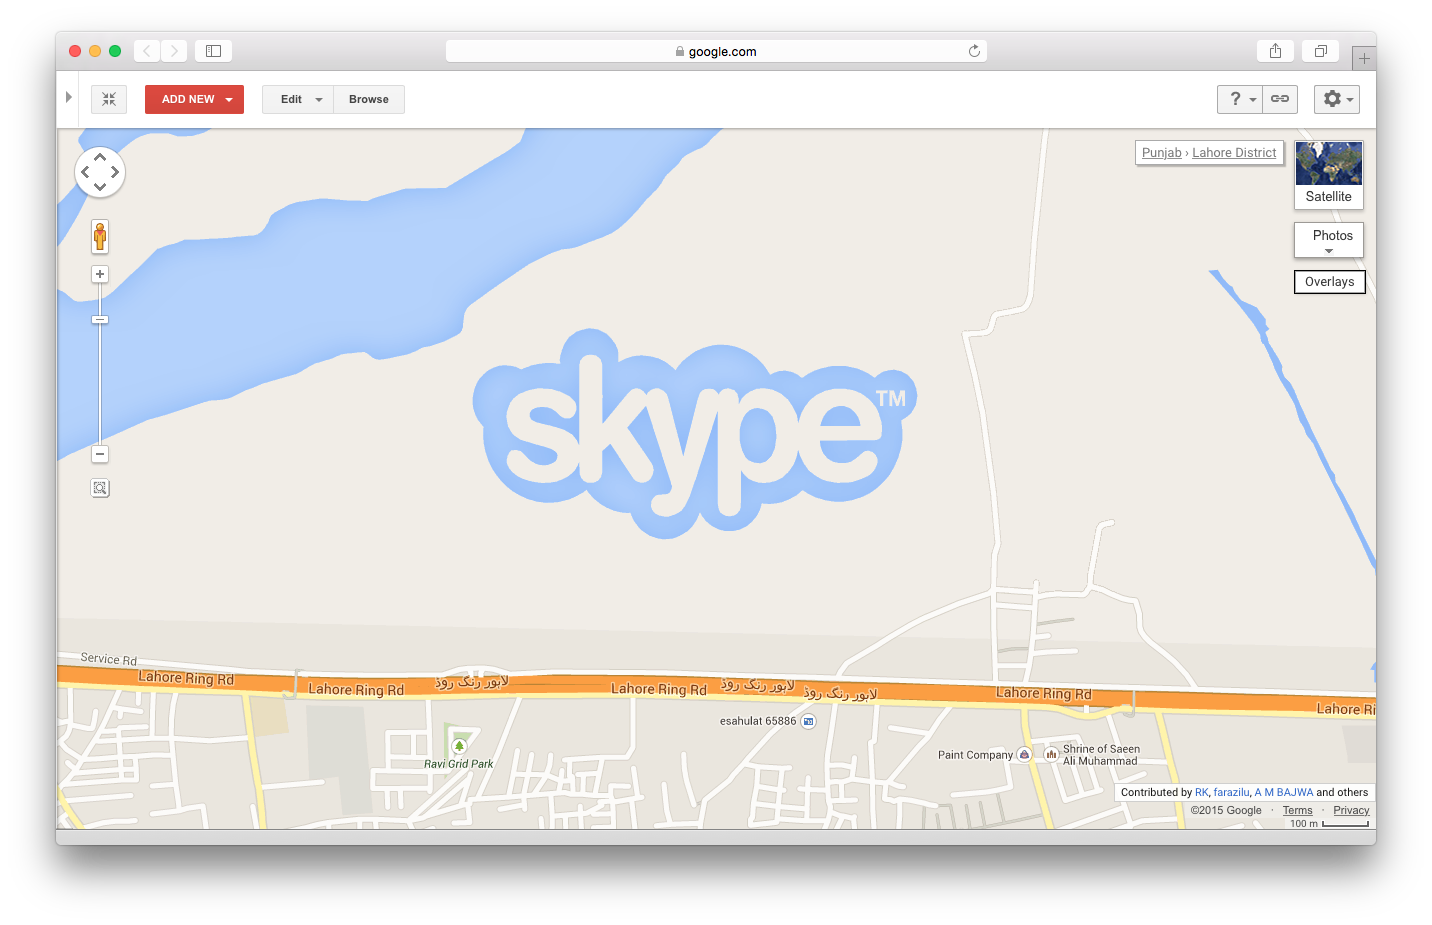 Skype logo at Google Maps in Lahore